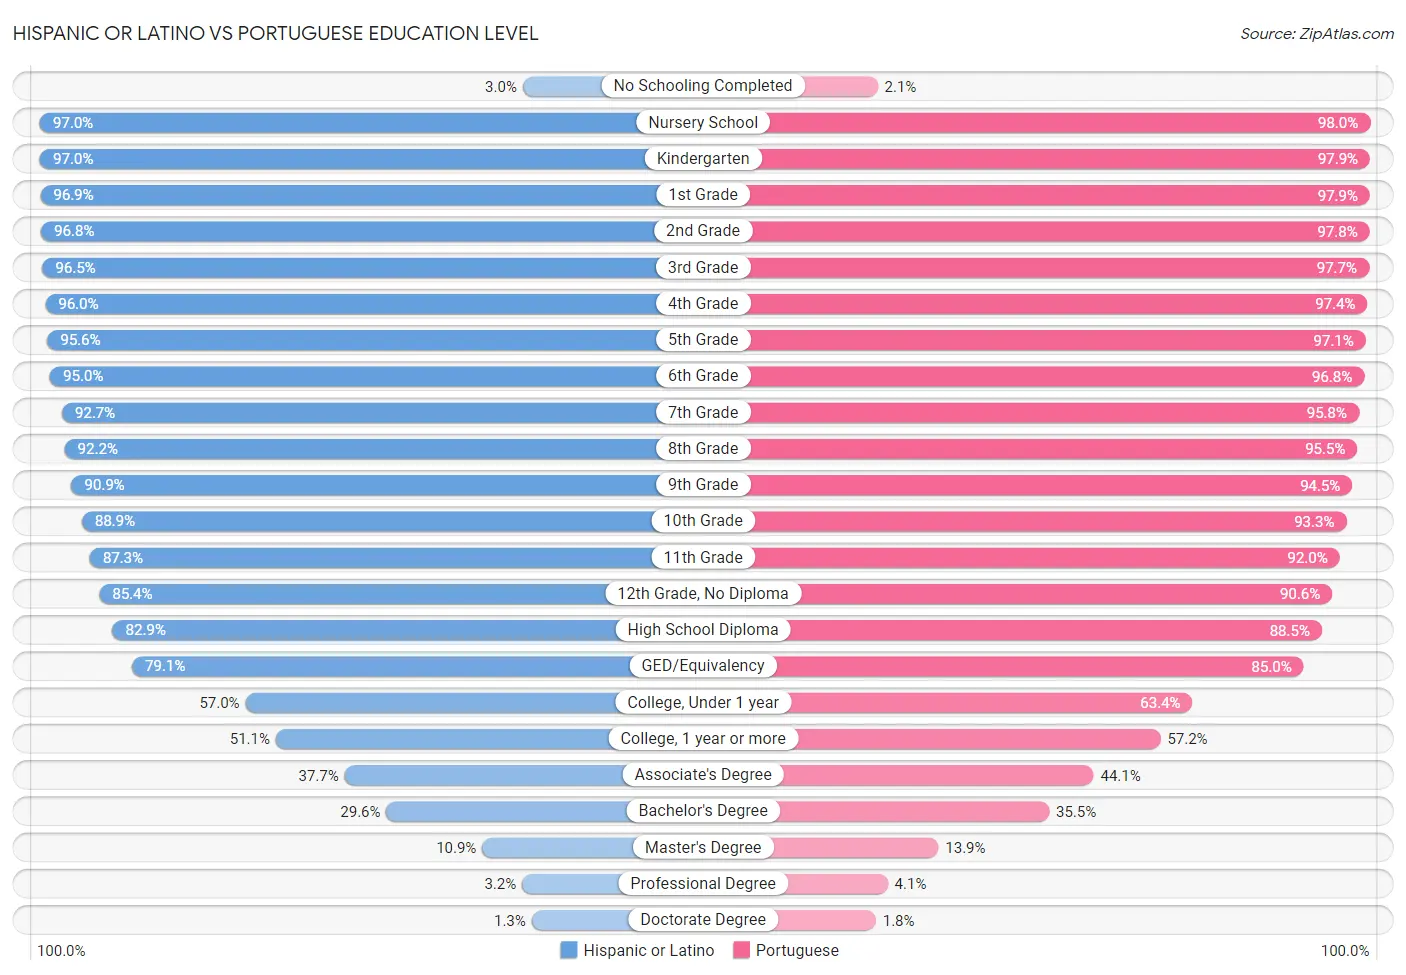 Hispanic or Latino vs Portuguese Education Level